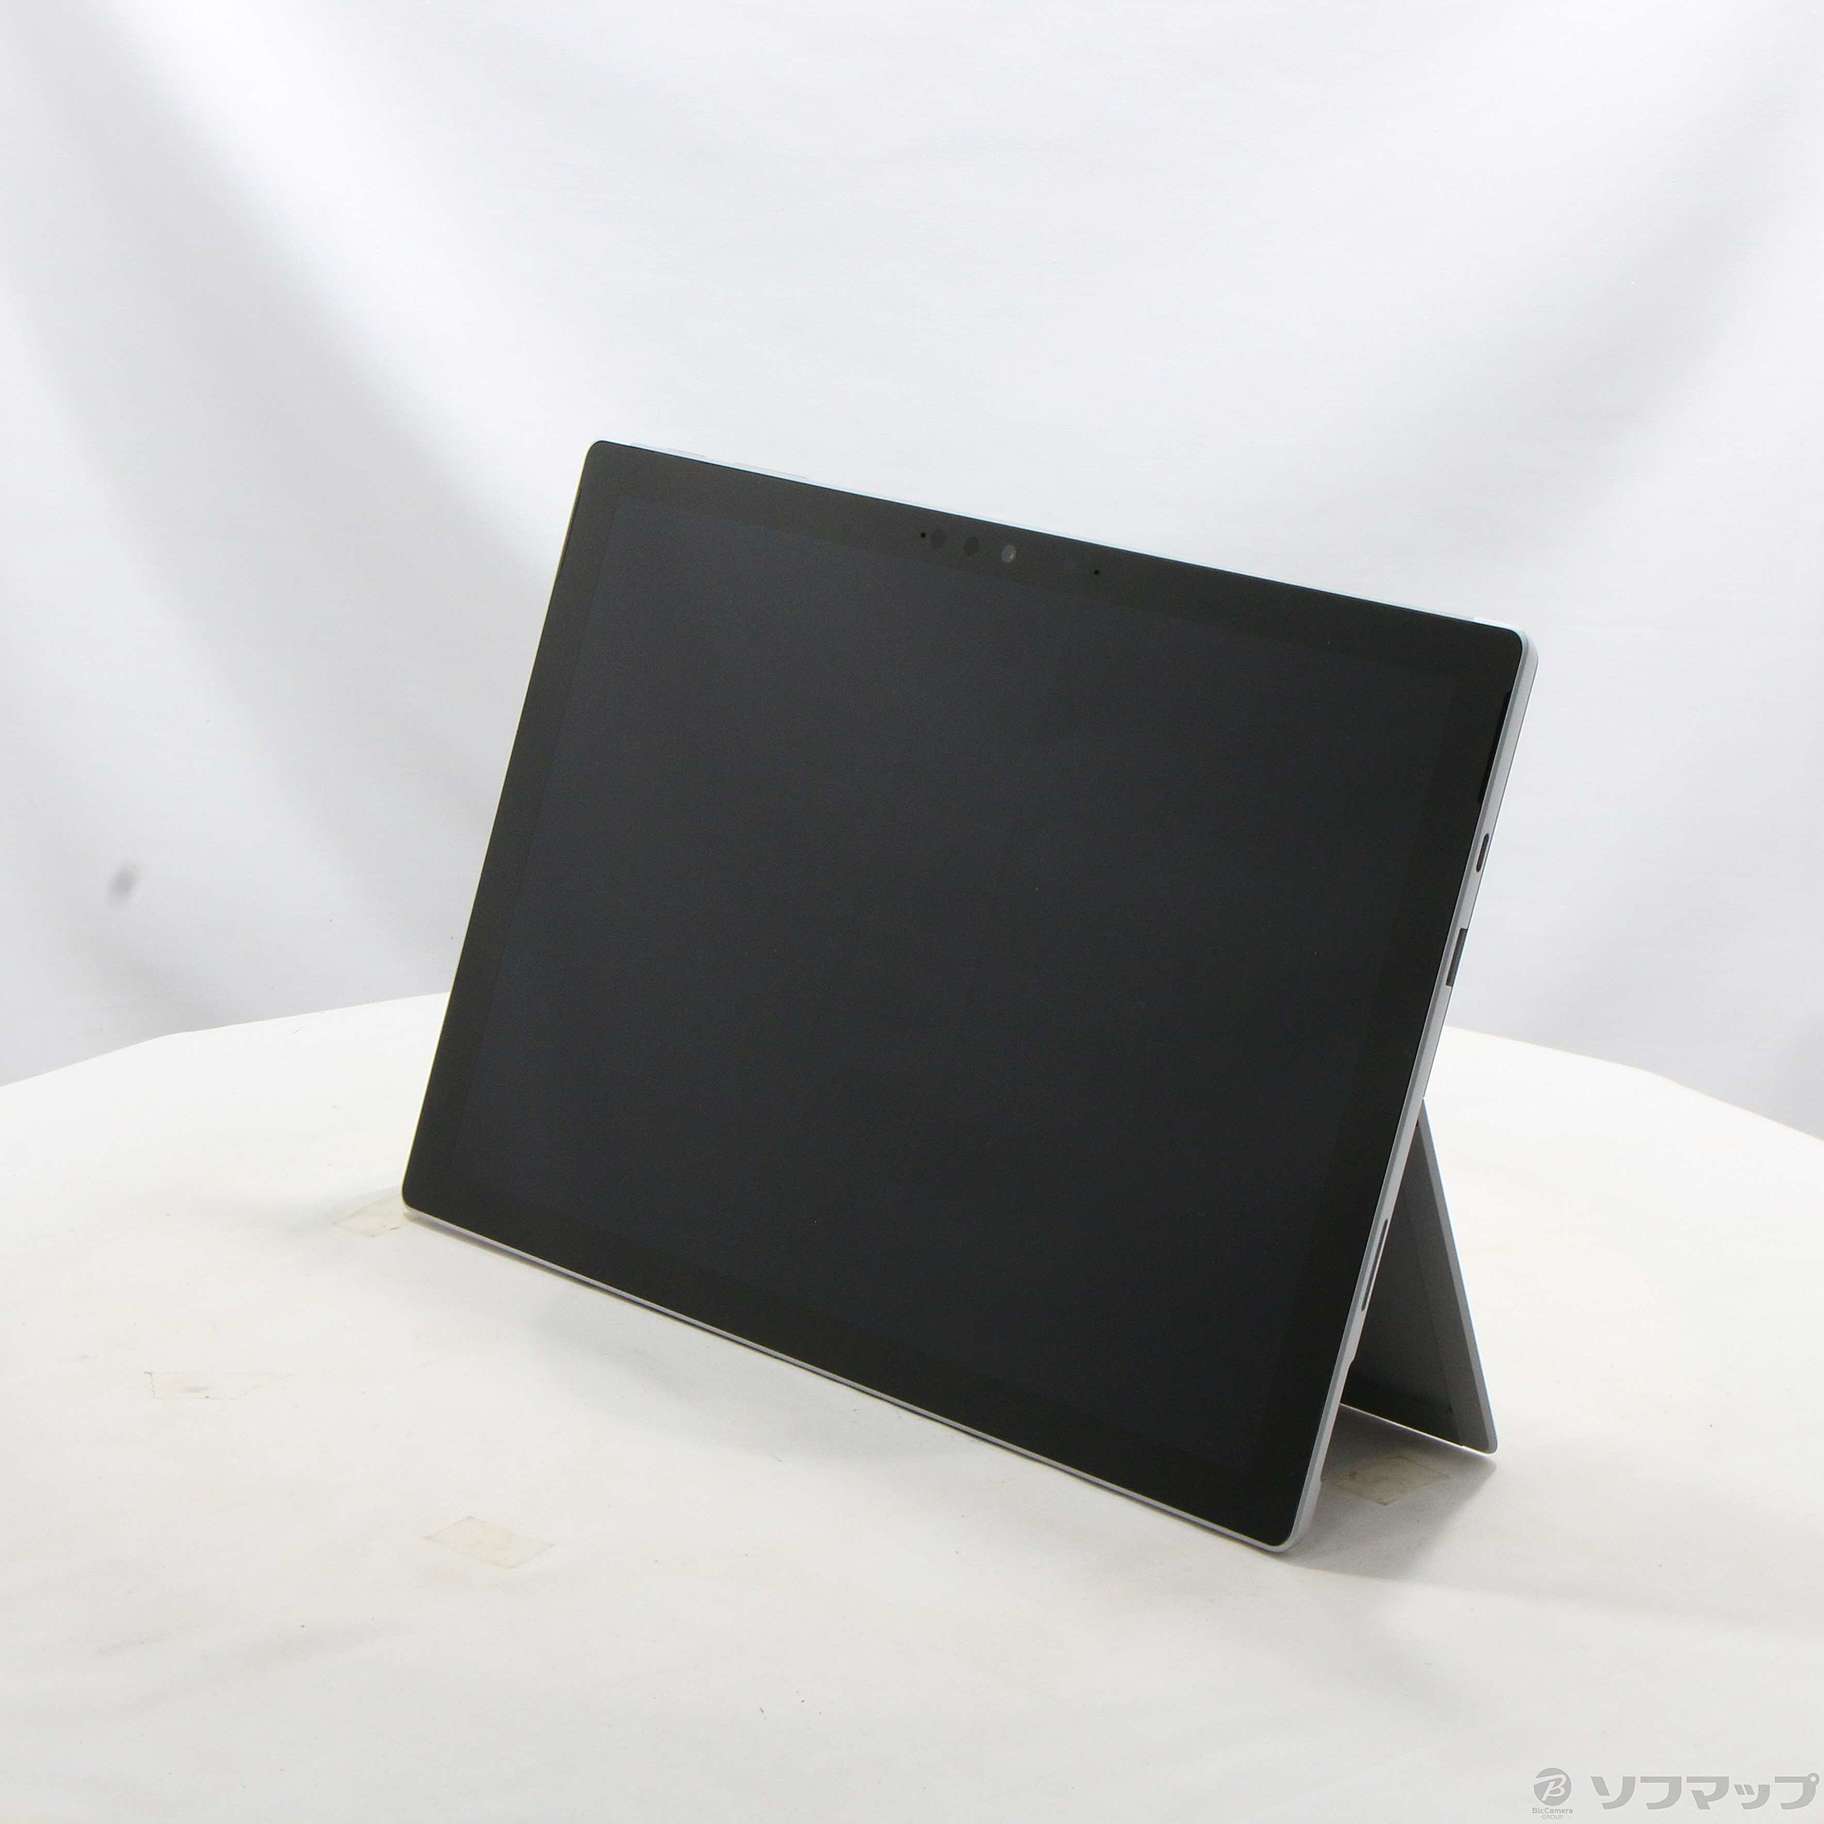 VDH-00012 Surface Pro 7 プラチナ 新品